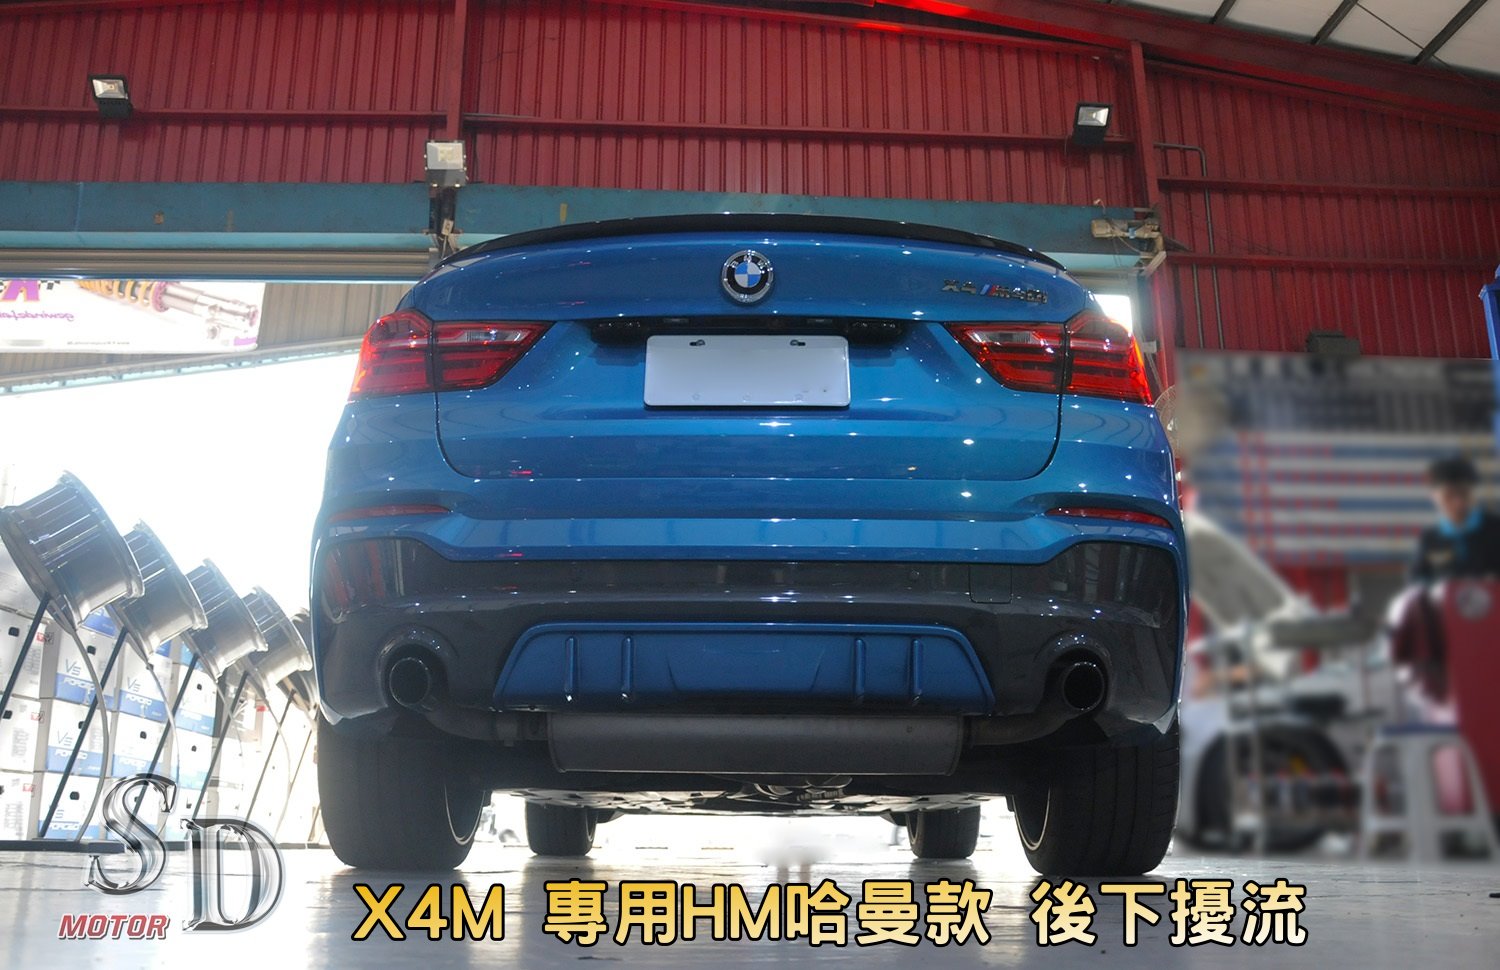 For BMW X4M (F26) (原廠M後保桿) 專用 哈曼款 後下巴, FRP素材 + 烤漆C16藍